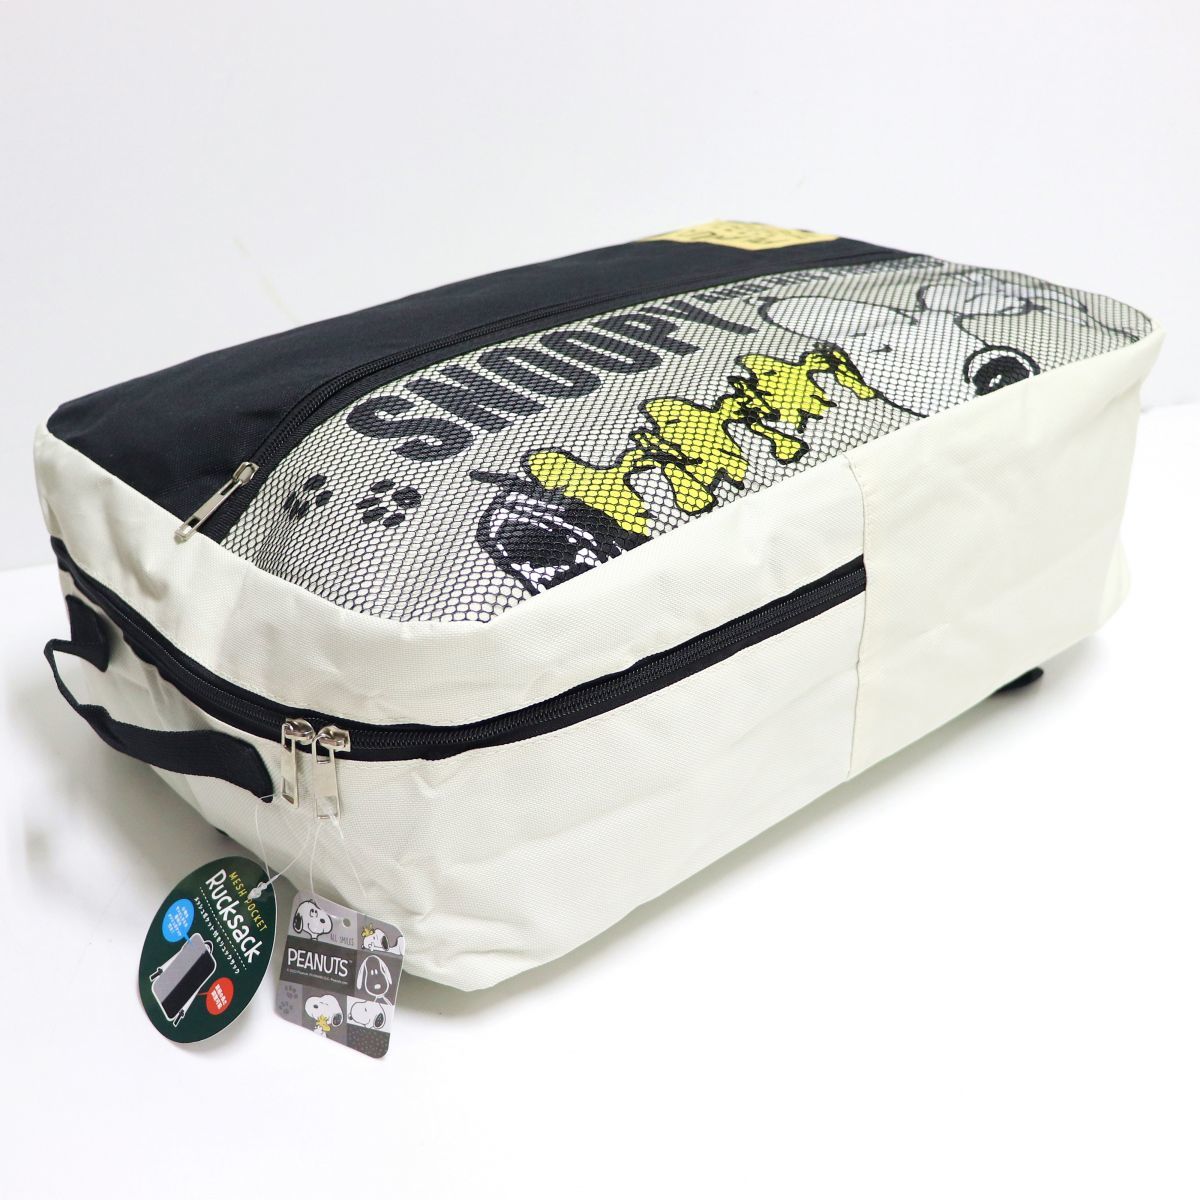 * Snoopy Peanuts SNOOPY PEANUTS новый товар рюкзак Day Pack рюкзак BAG портфель сумка [SNOOPYB-WHT1N] один шесть *QWER*